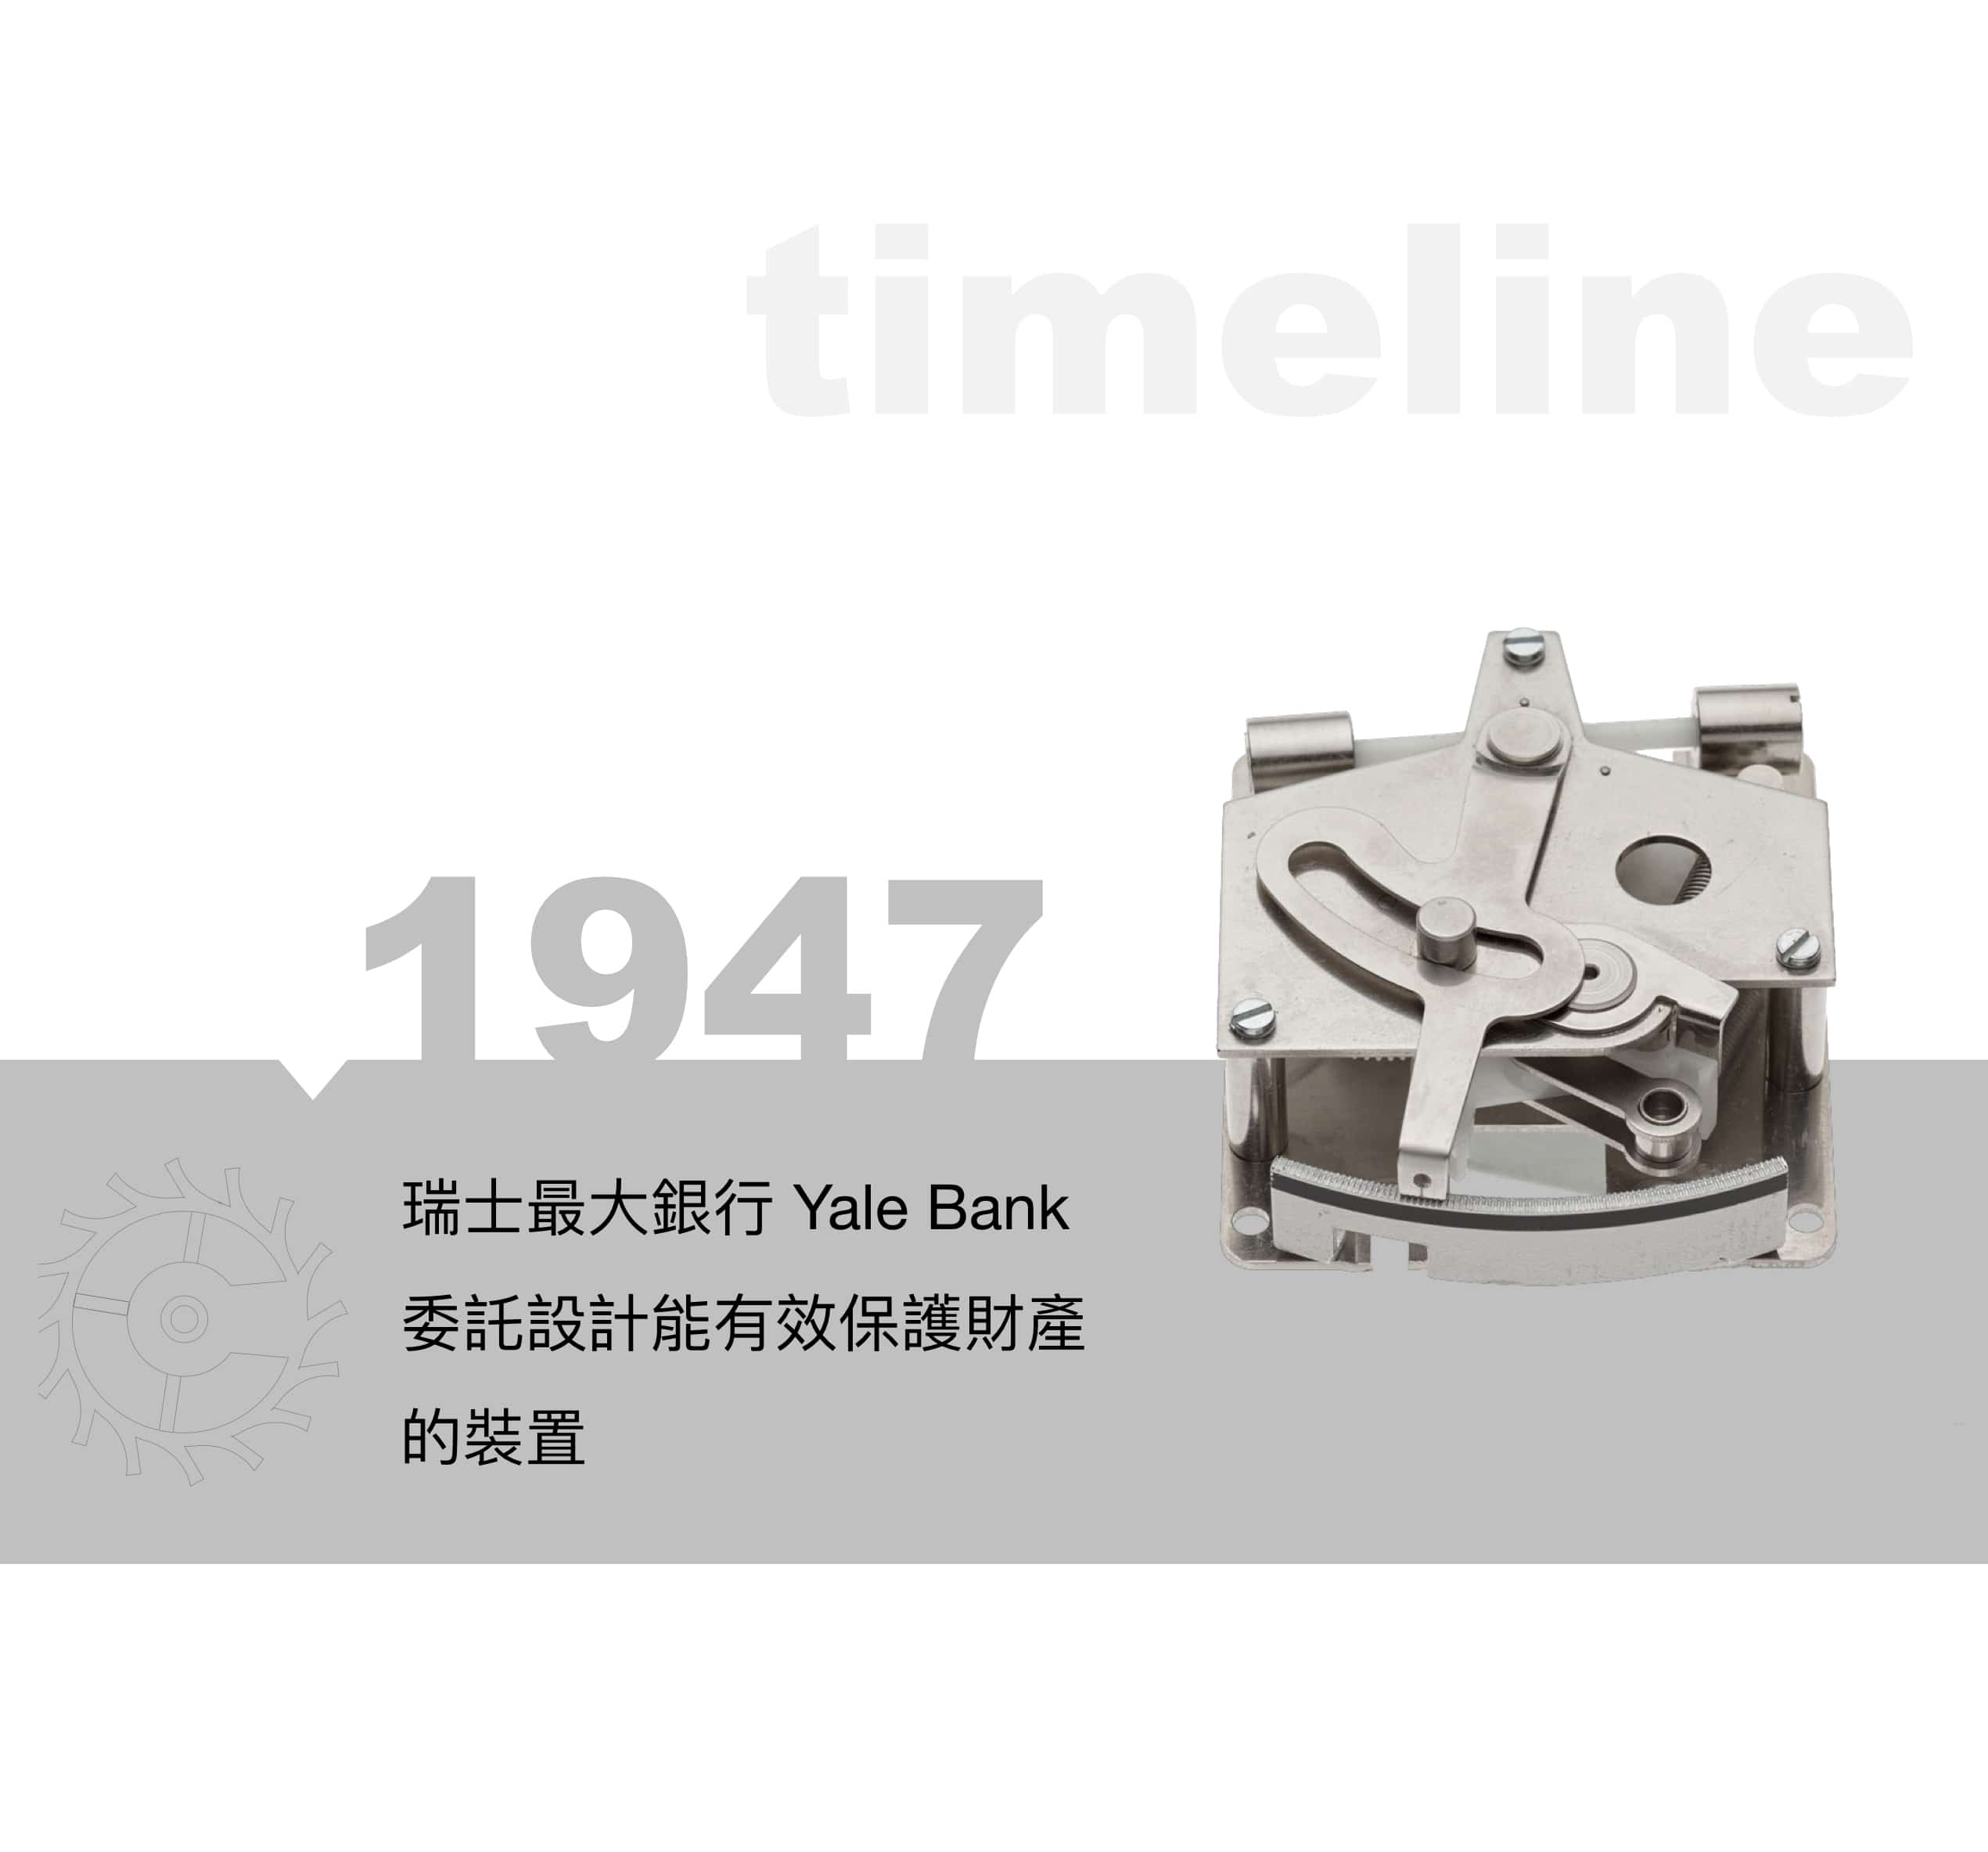 STB timeline 1947 瑞士最大銀行 Yale Bank 委託設計能有效保護財產的裝置